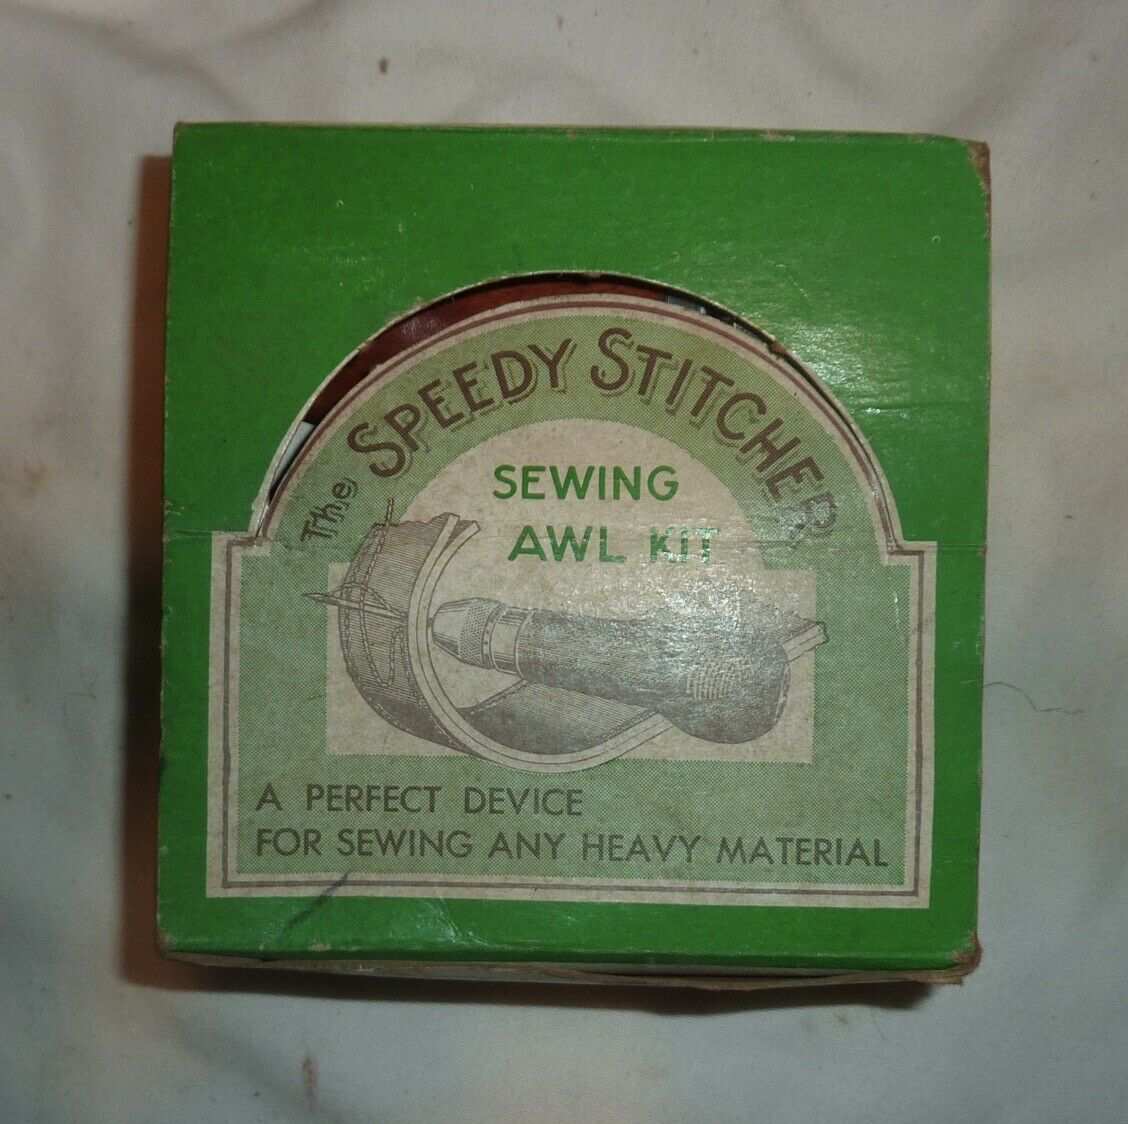 Vintage Speedy Stitcher Sewing Awl